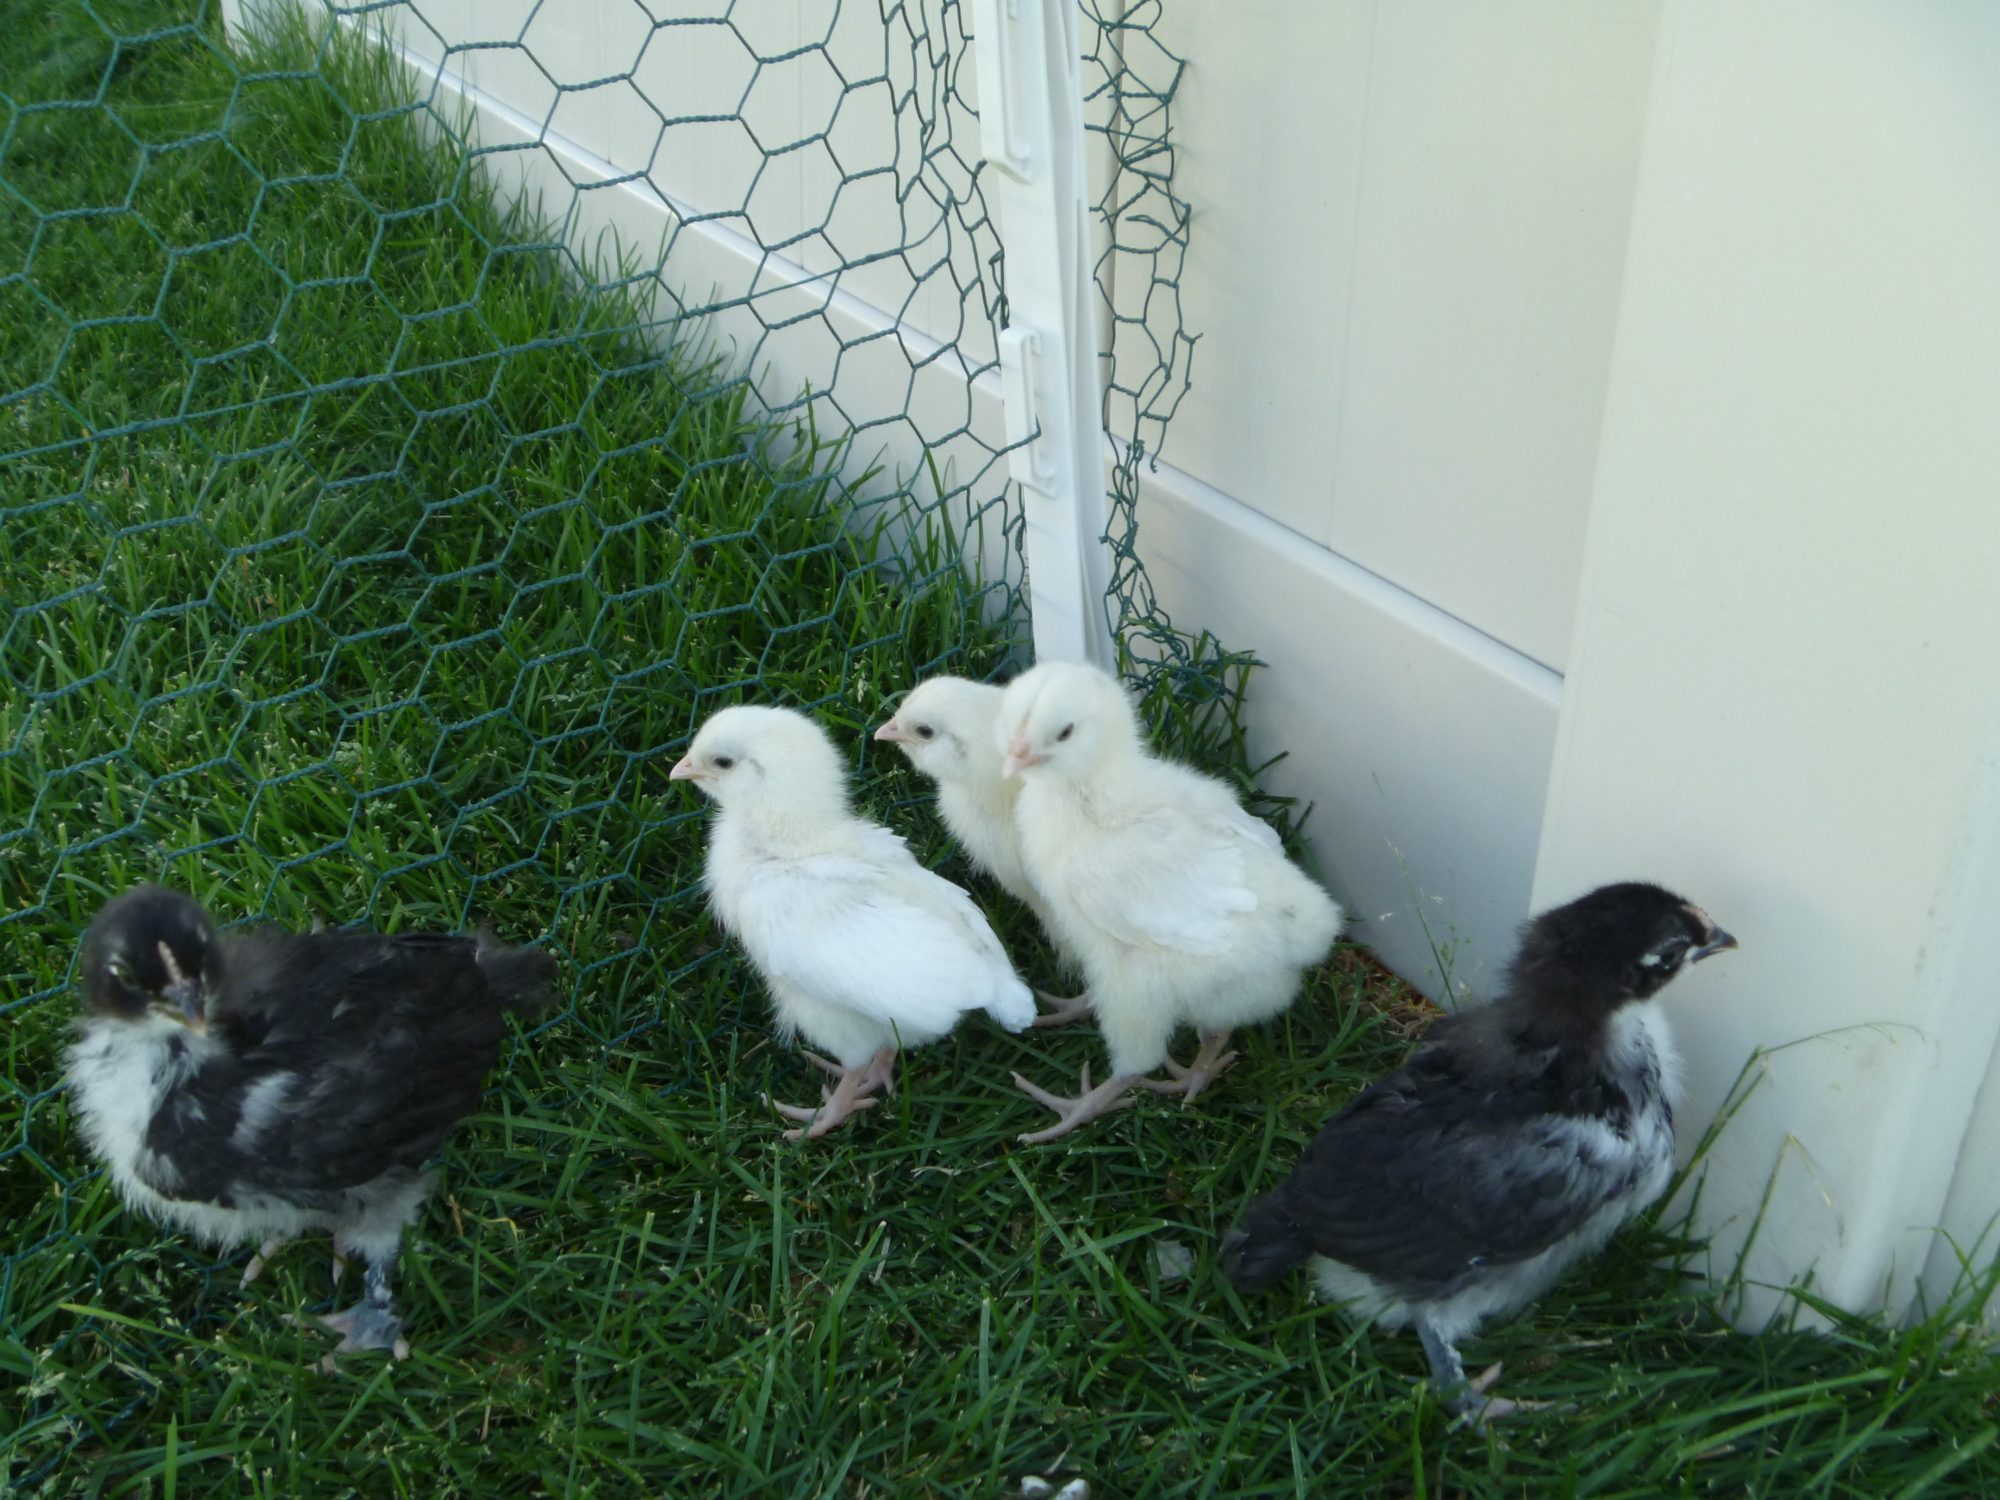 Leghorn EE and FBCM chicks